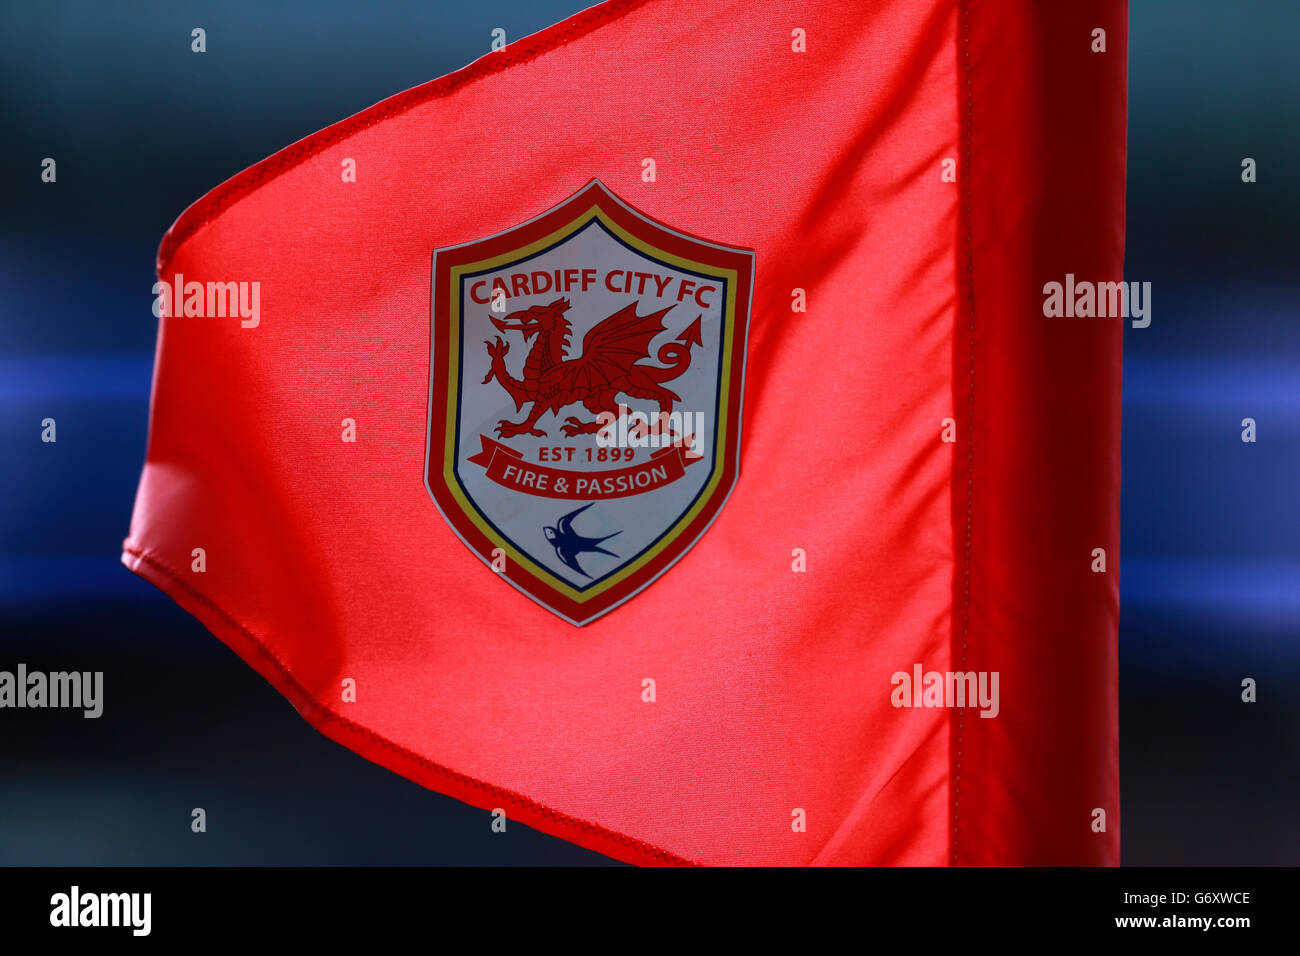 New Badge on the Cardiff City Stadium, 31/07/12 Cardiff Cit…